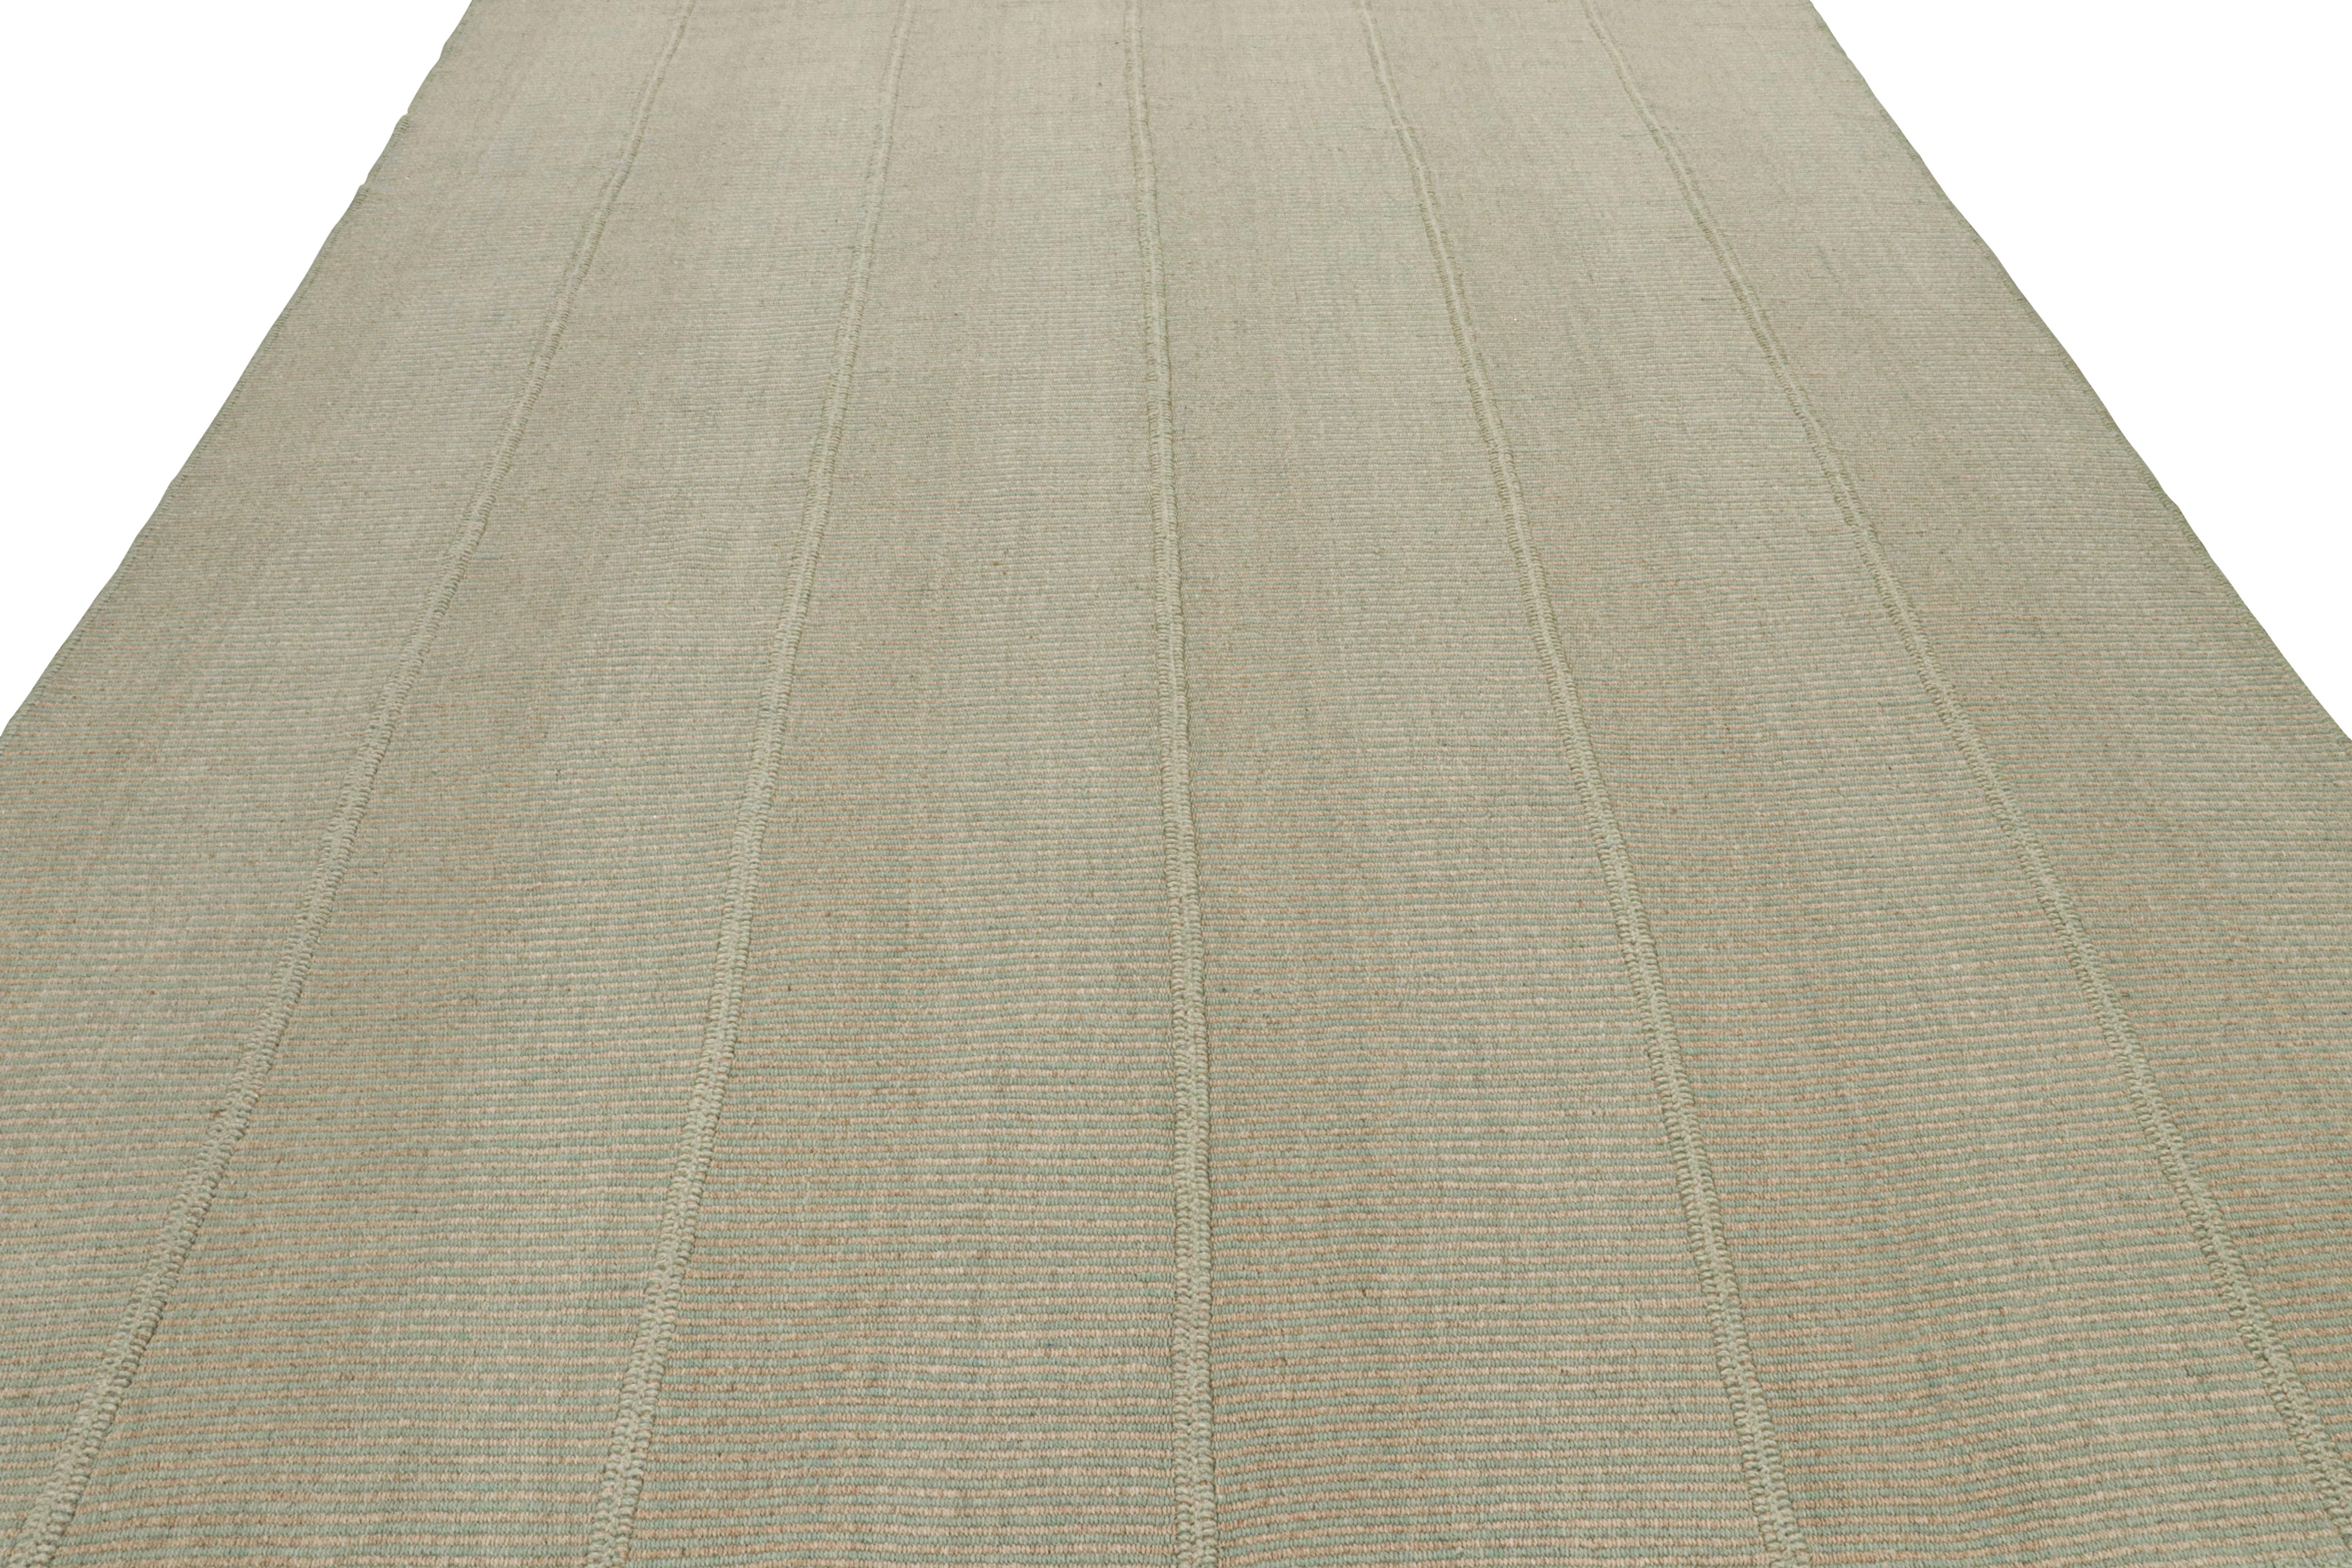 Moderne Rug & Kilim's Contemporary Kilim in Greene Greene, with Beige Accents (Kilim contemporain en vert, avec des accents beiges) en vente